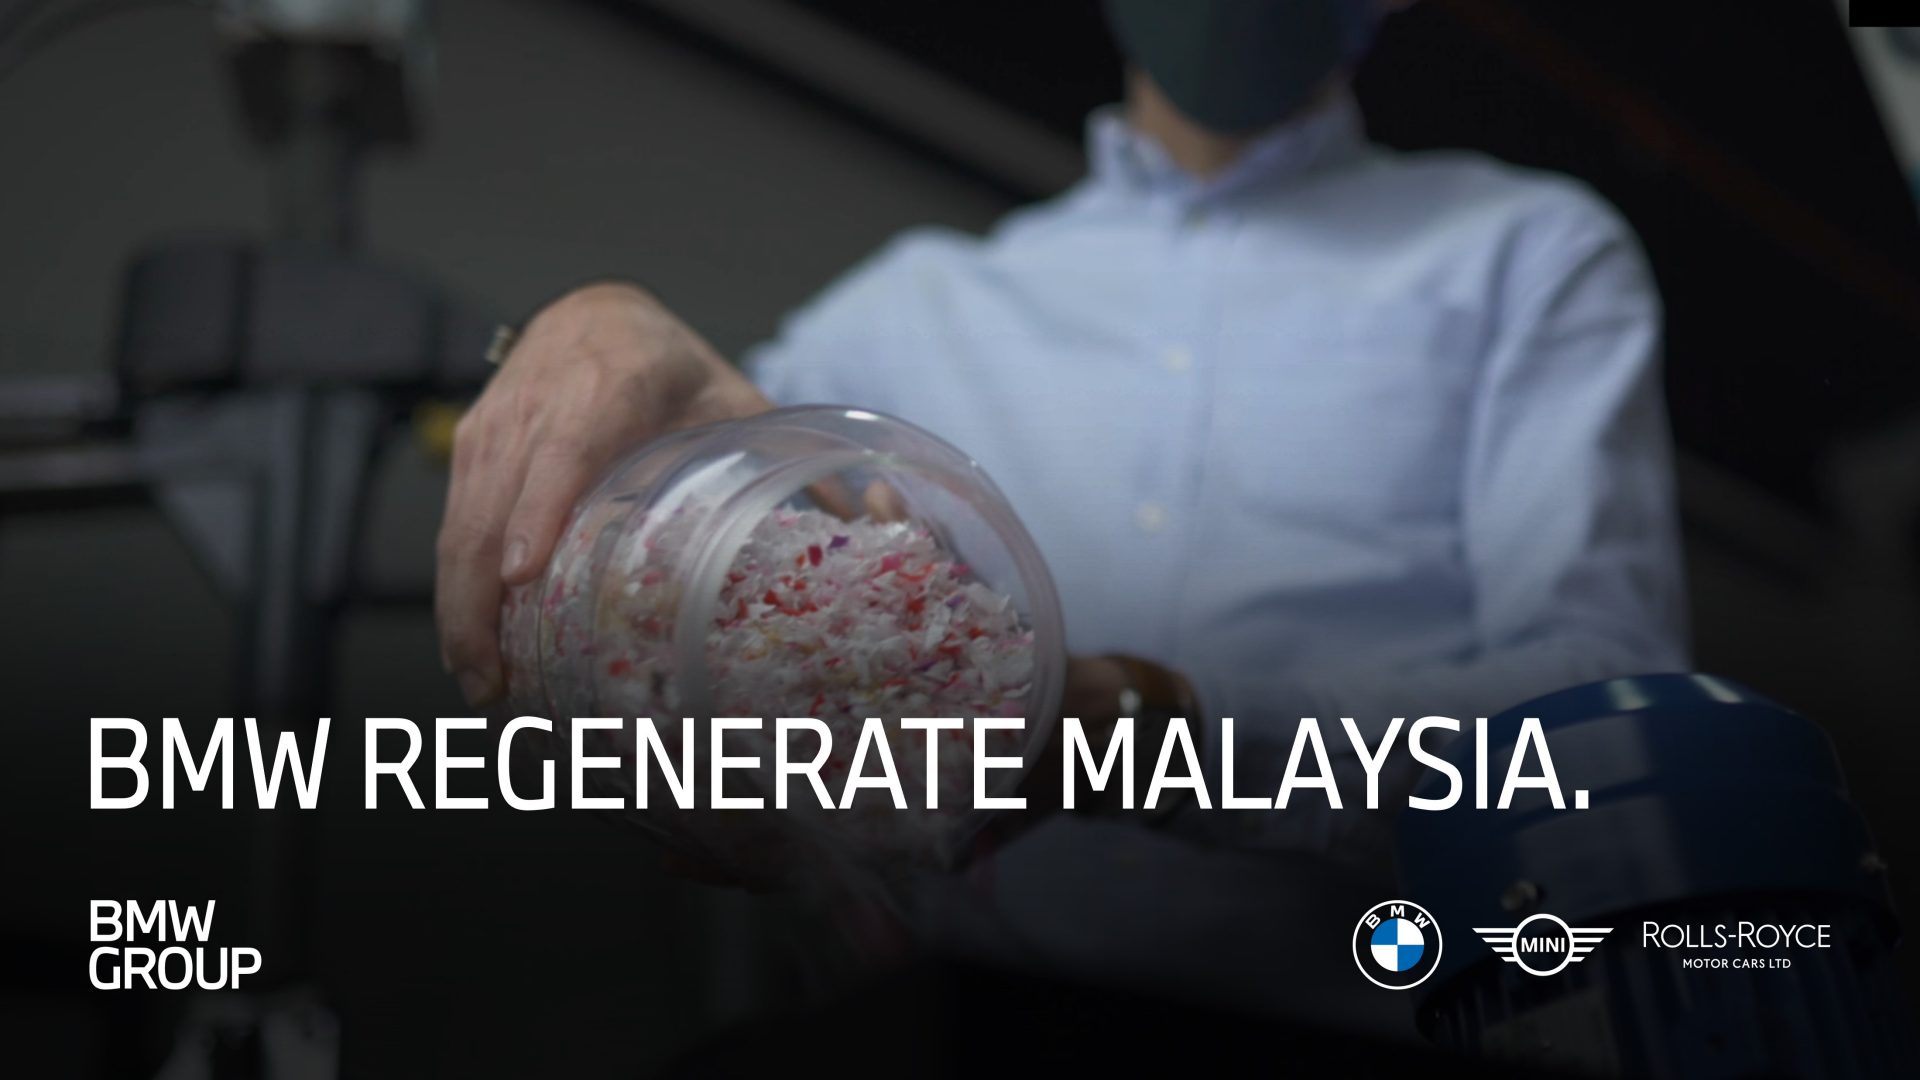 BMW-Careers-locations-malaysia-regenerate-thumbnail.jpg